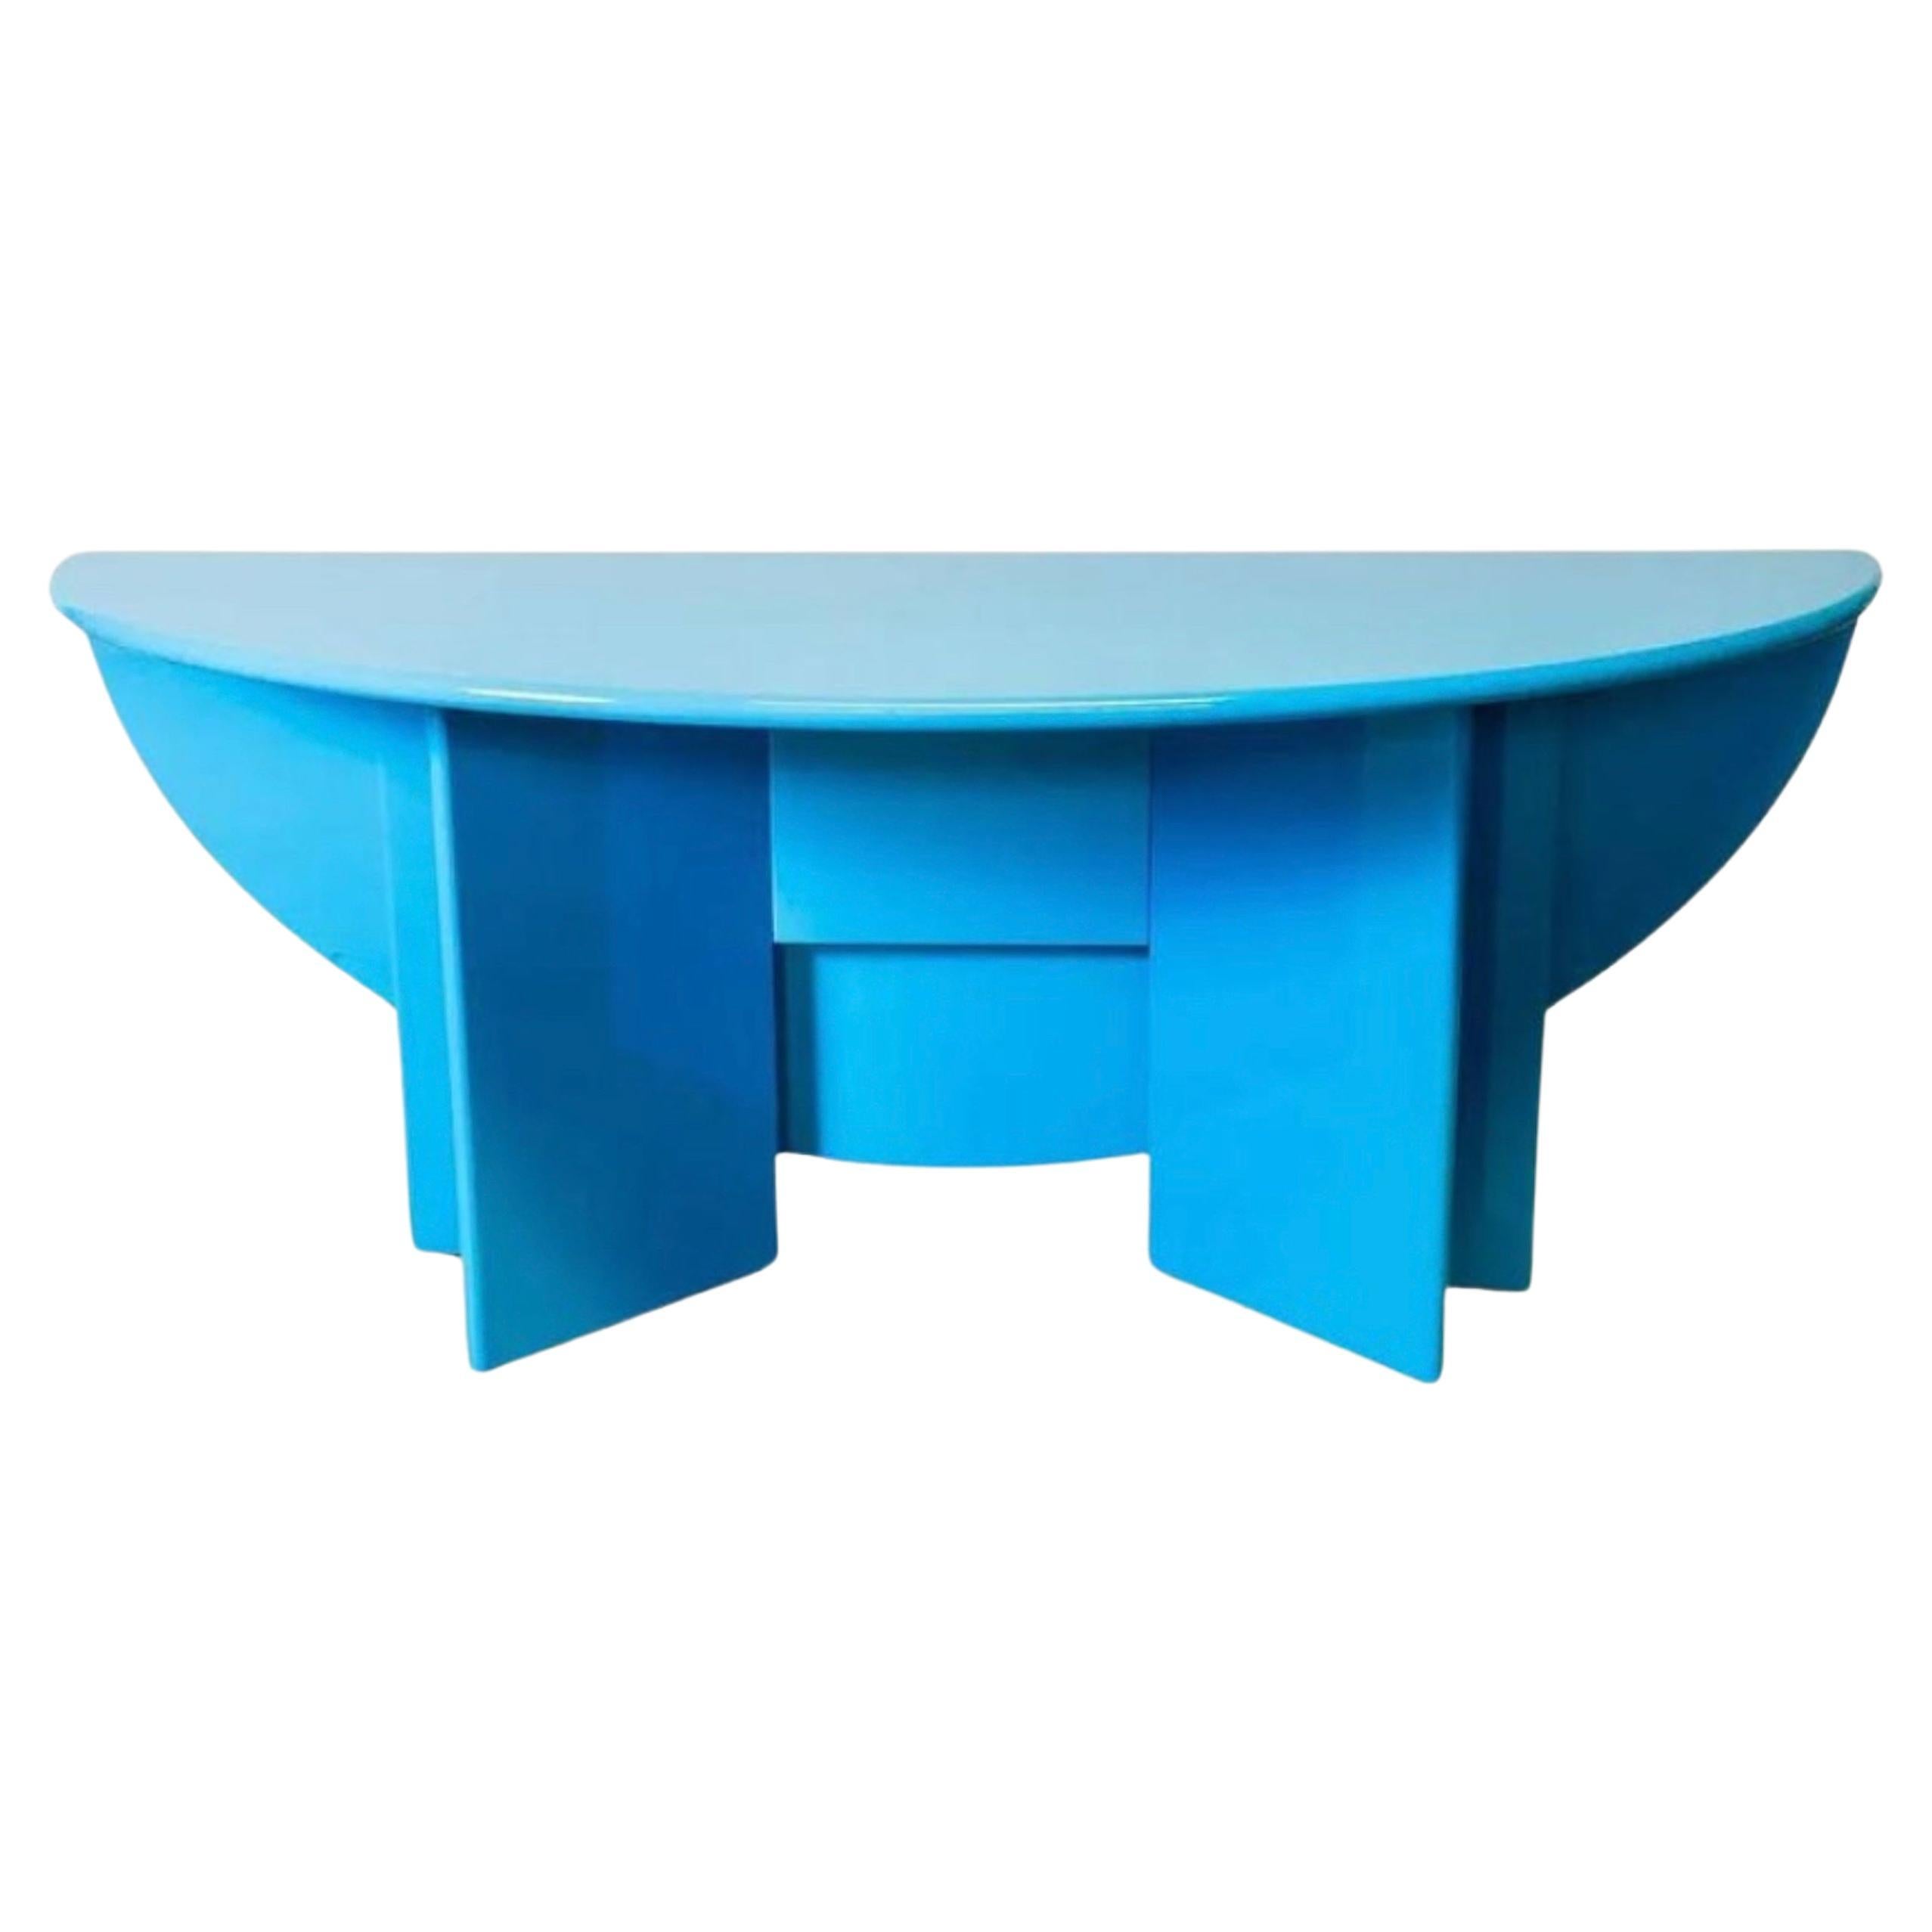 "Antella" Table Designed by Kazuhide Takahama for Simon Gavina, 1975